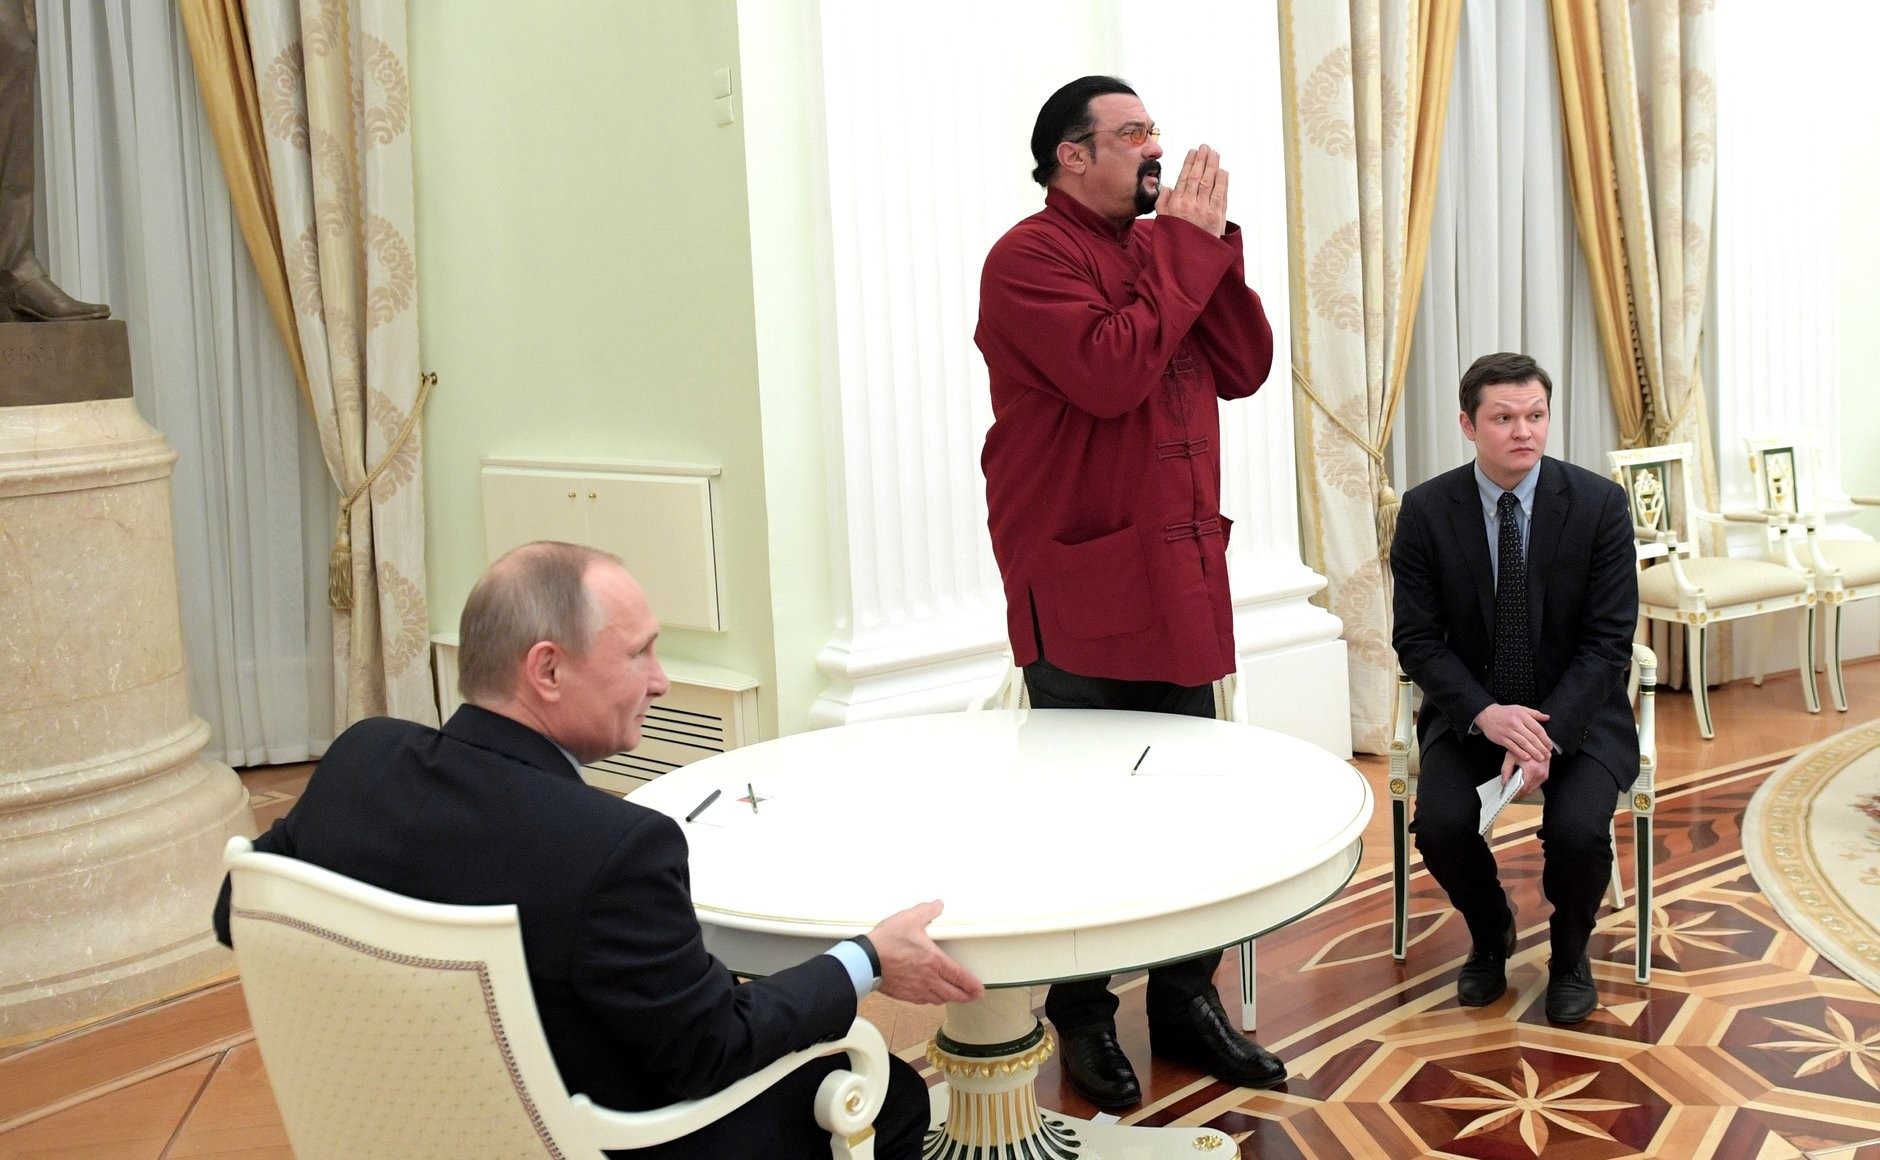 Путин наградил Стивена Сигала орденом Дружбы